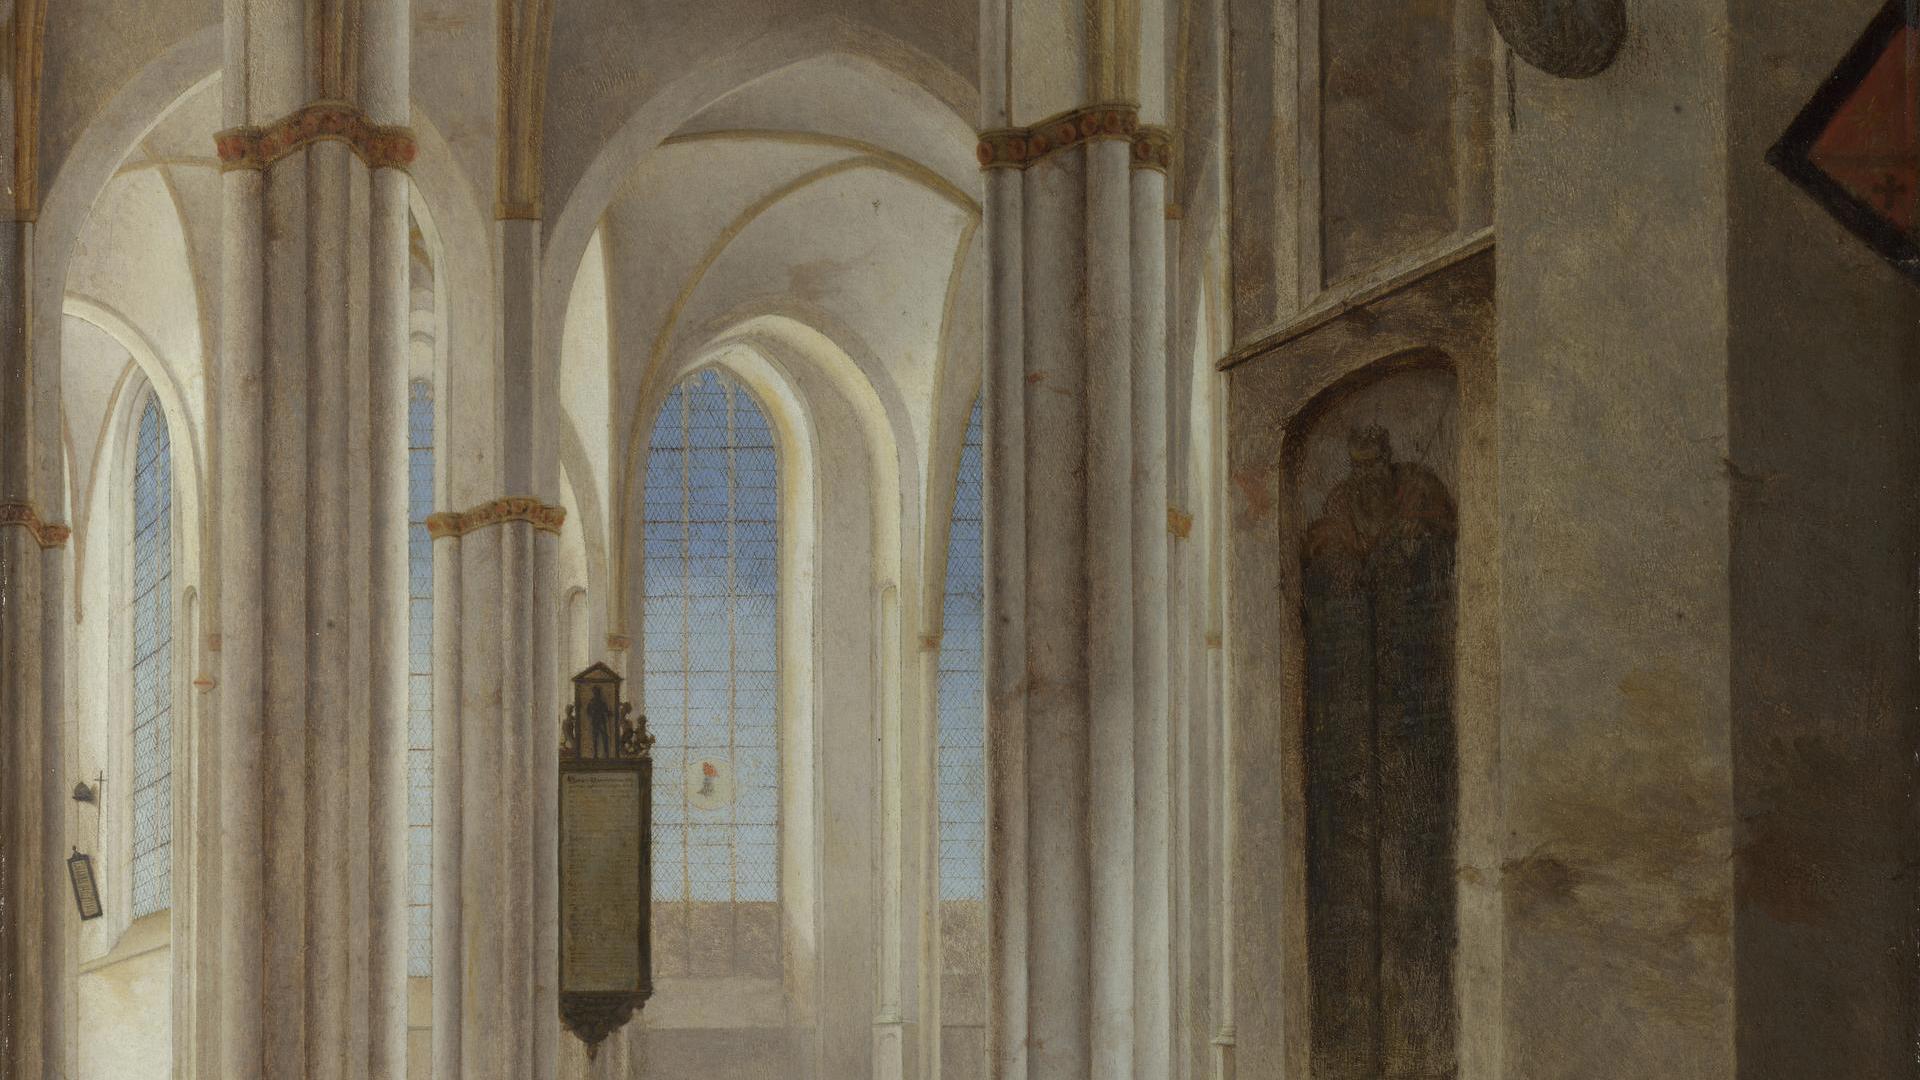 The Interior of the Buurkerk at Utrecht by Pieter Saenredam